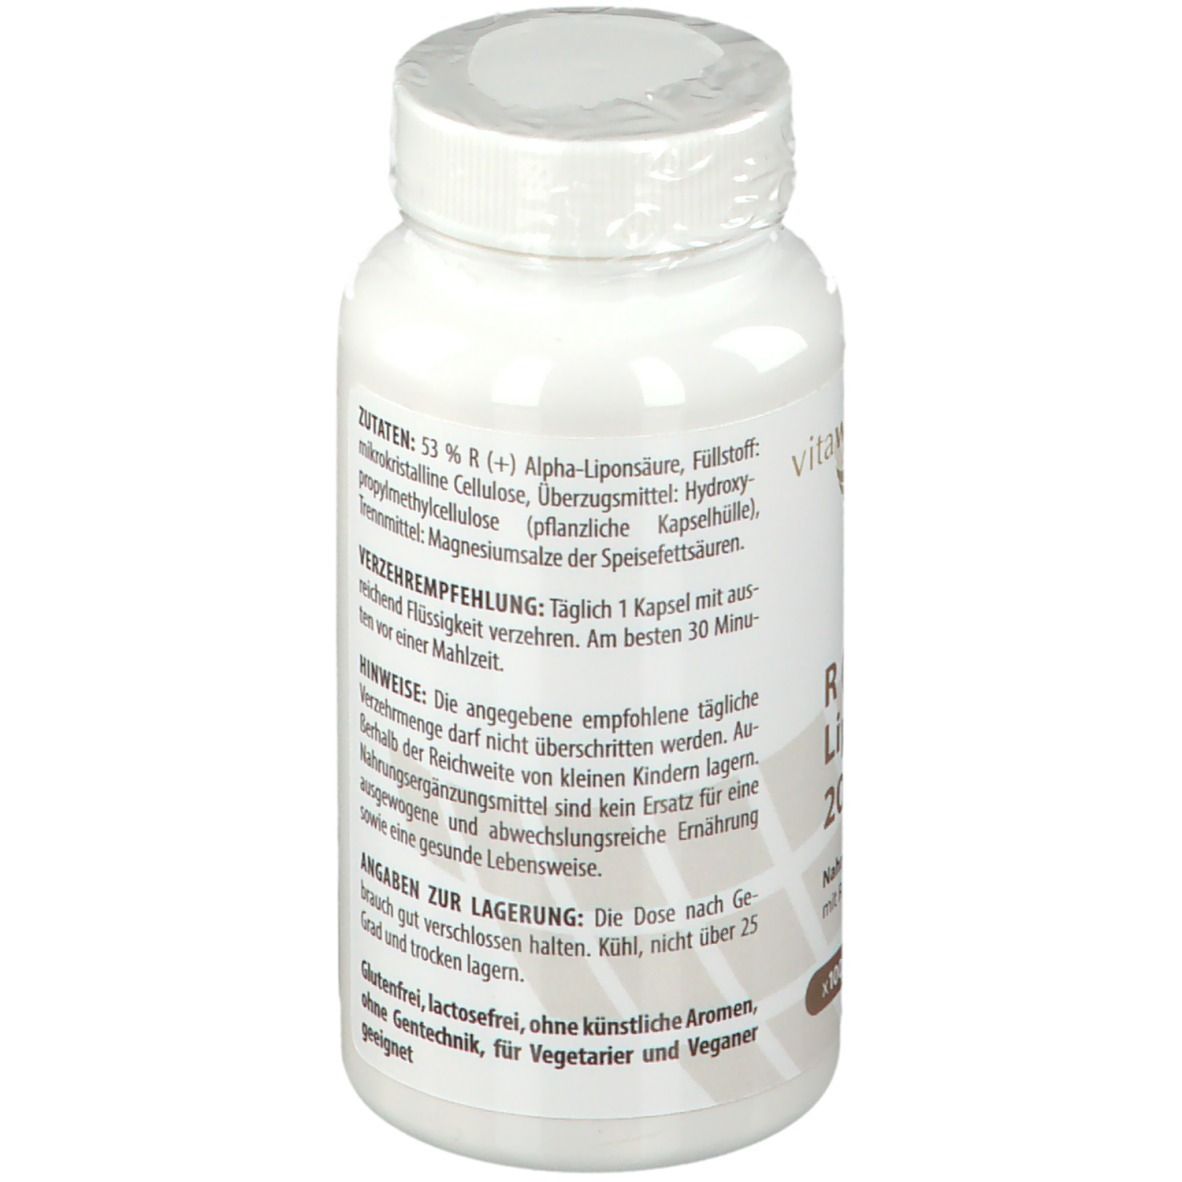 R(+) Alpha-Liponsäure 200 mg